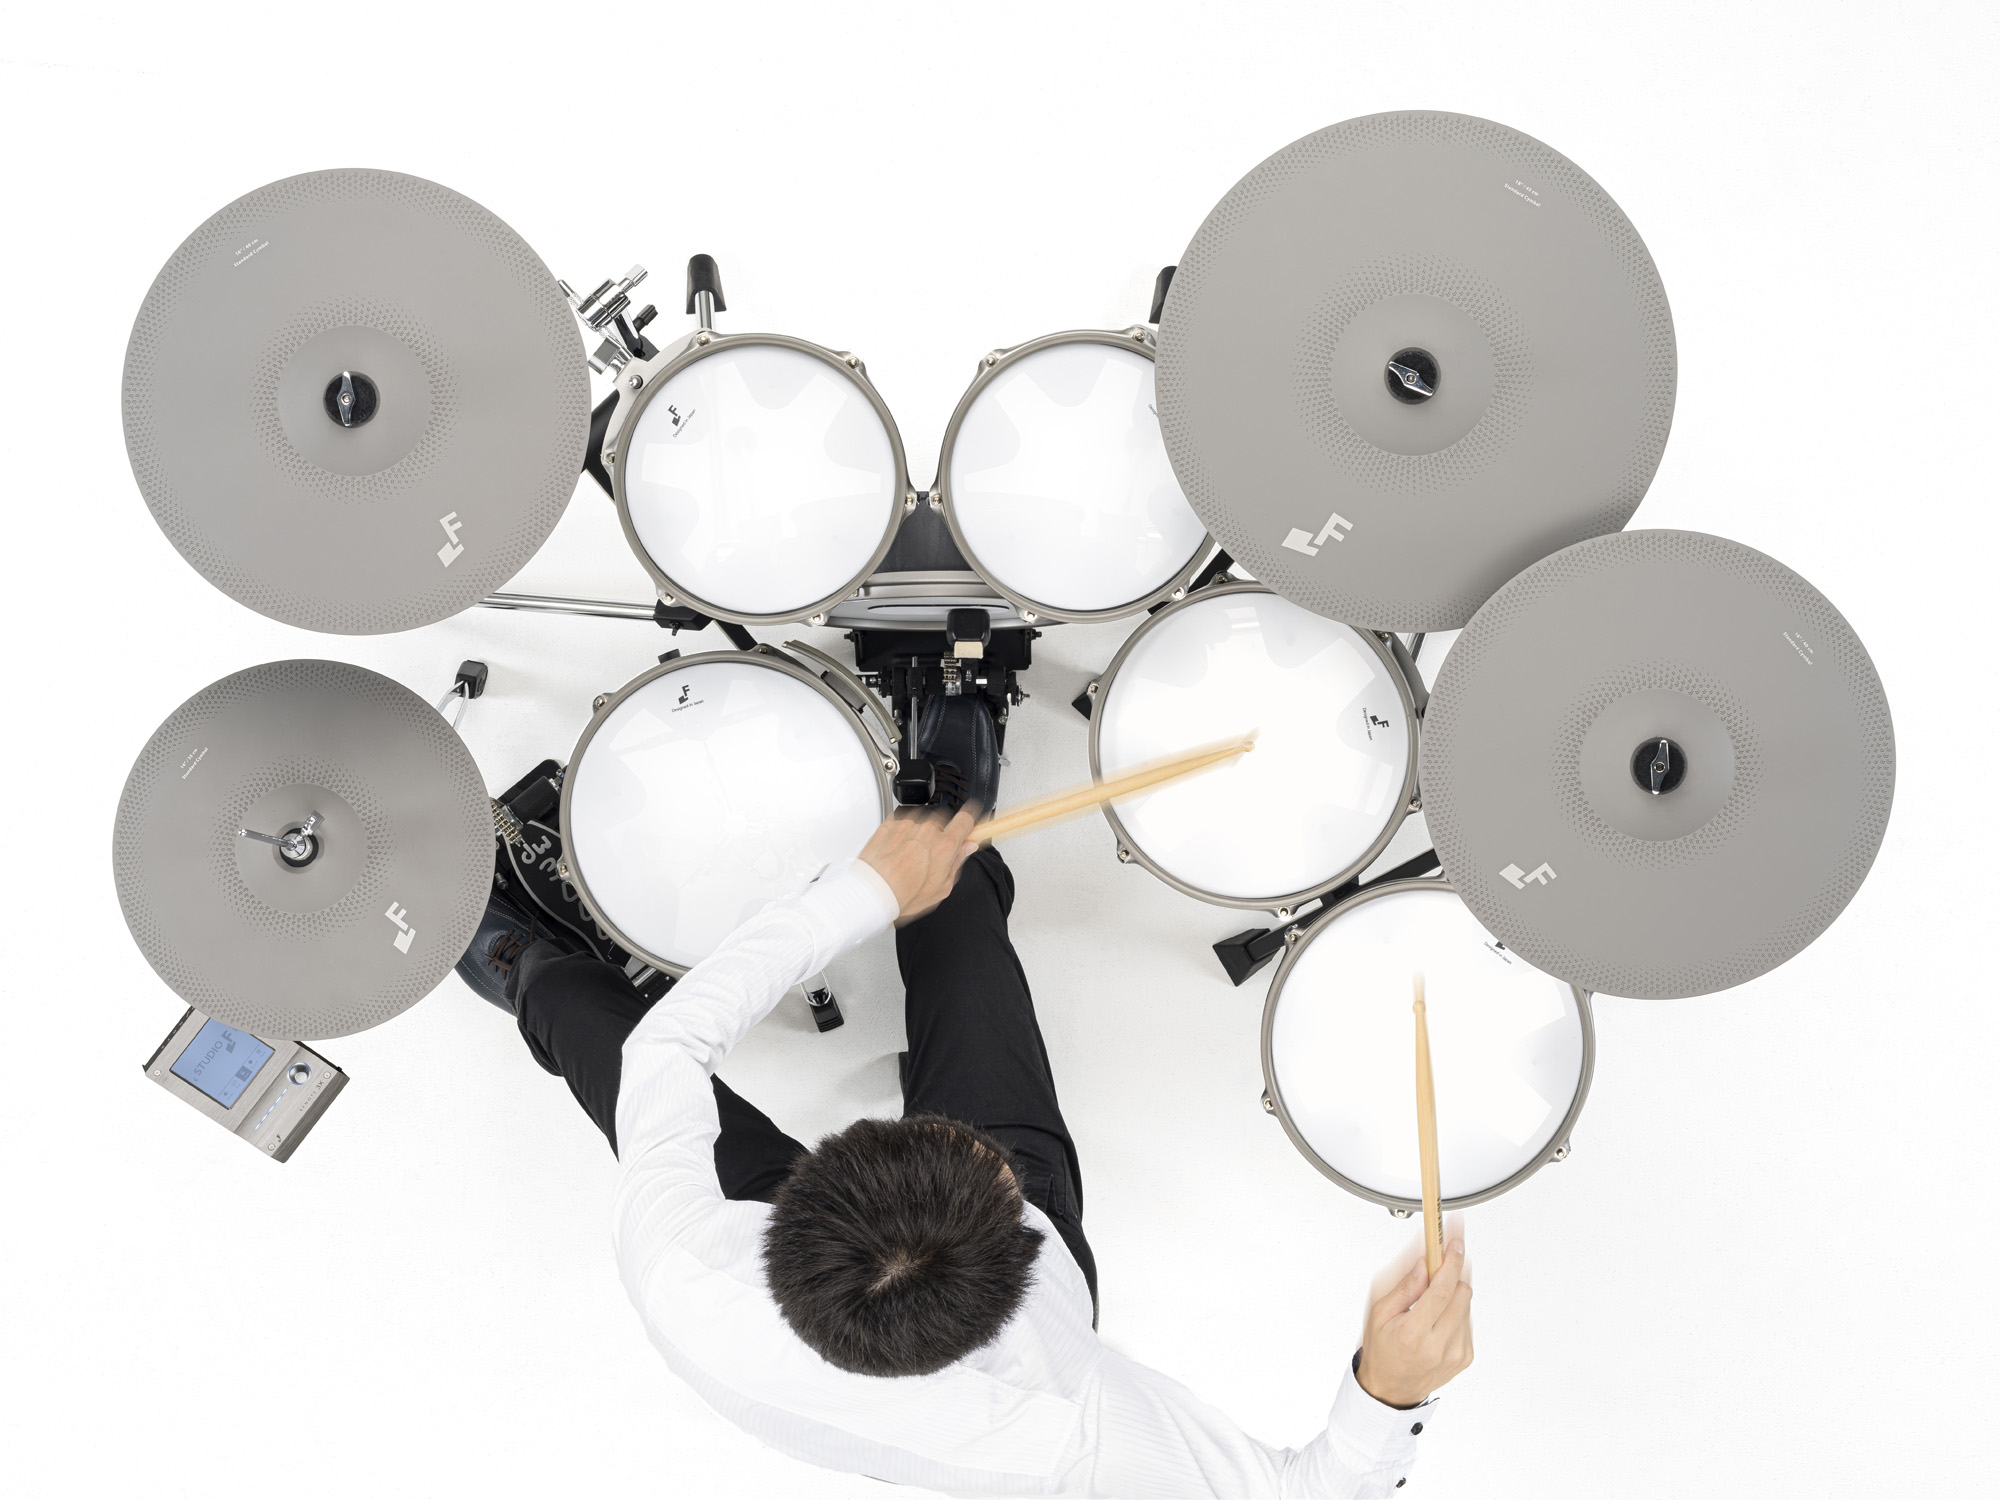 Efnote Efd3x Drum Kit - Komplett E-Drum Set - Variation 2